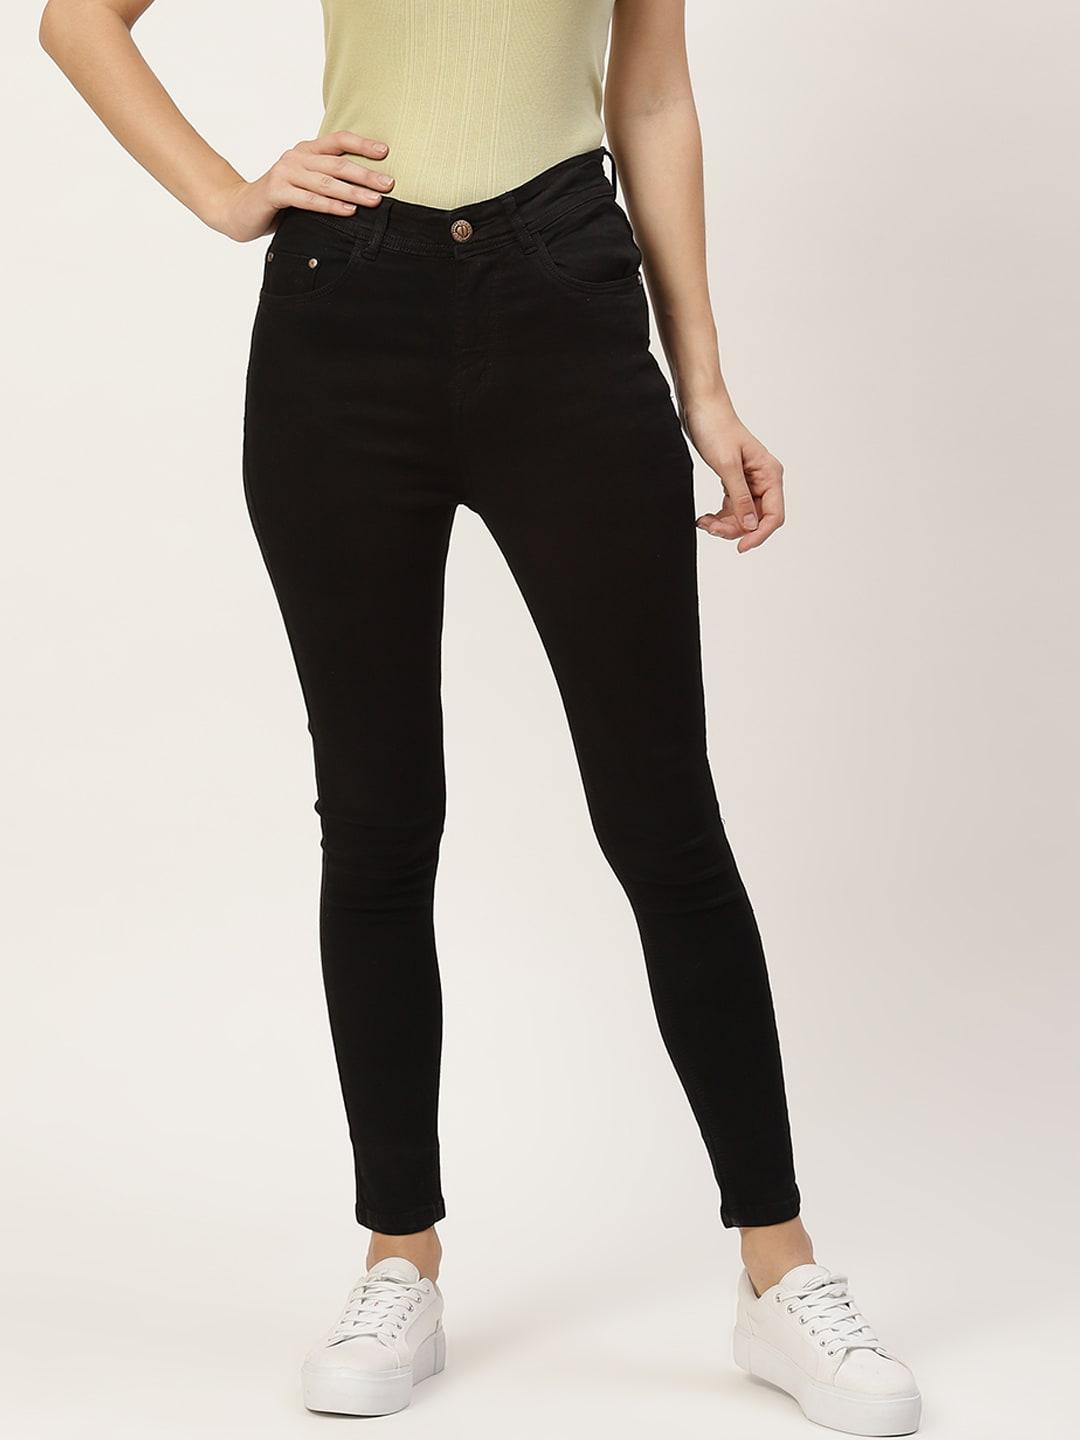 paris hamilton women black skinny fit high-rise stretchable jeans